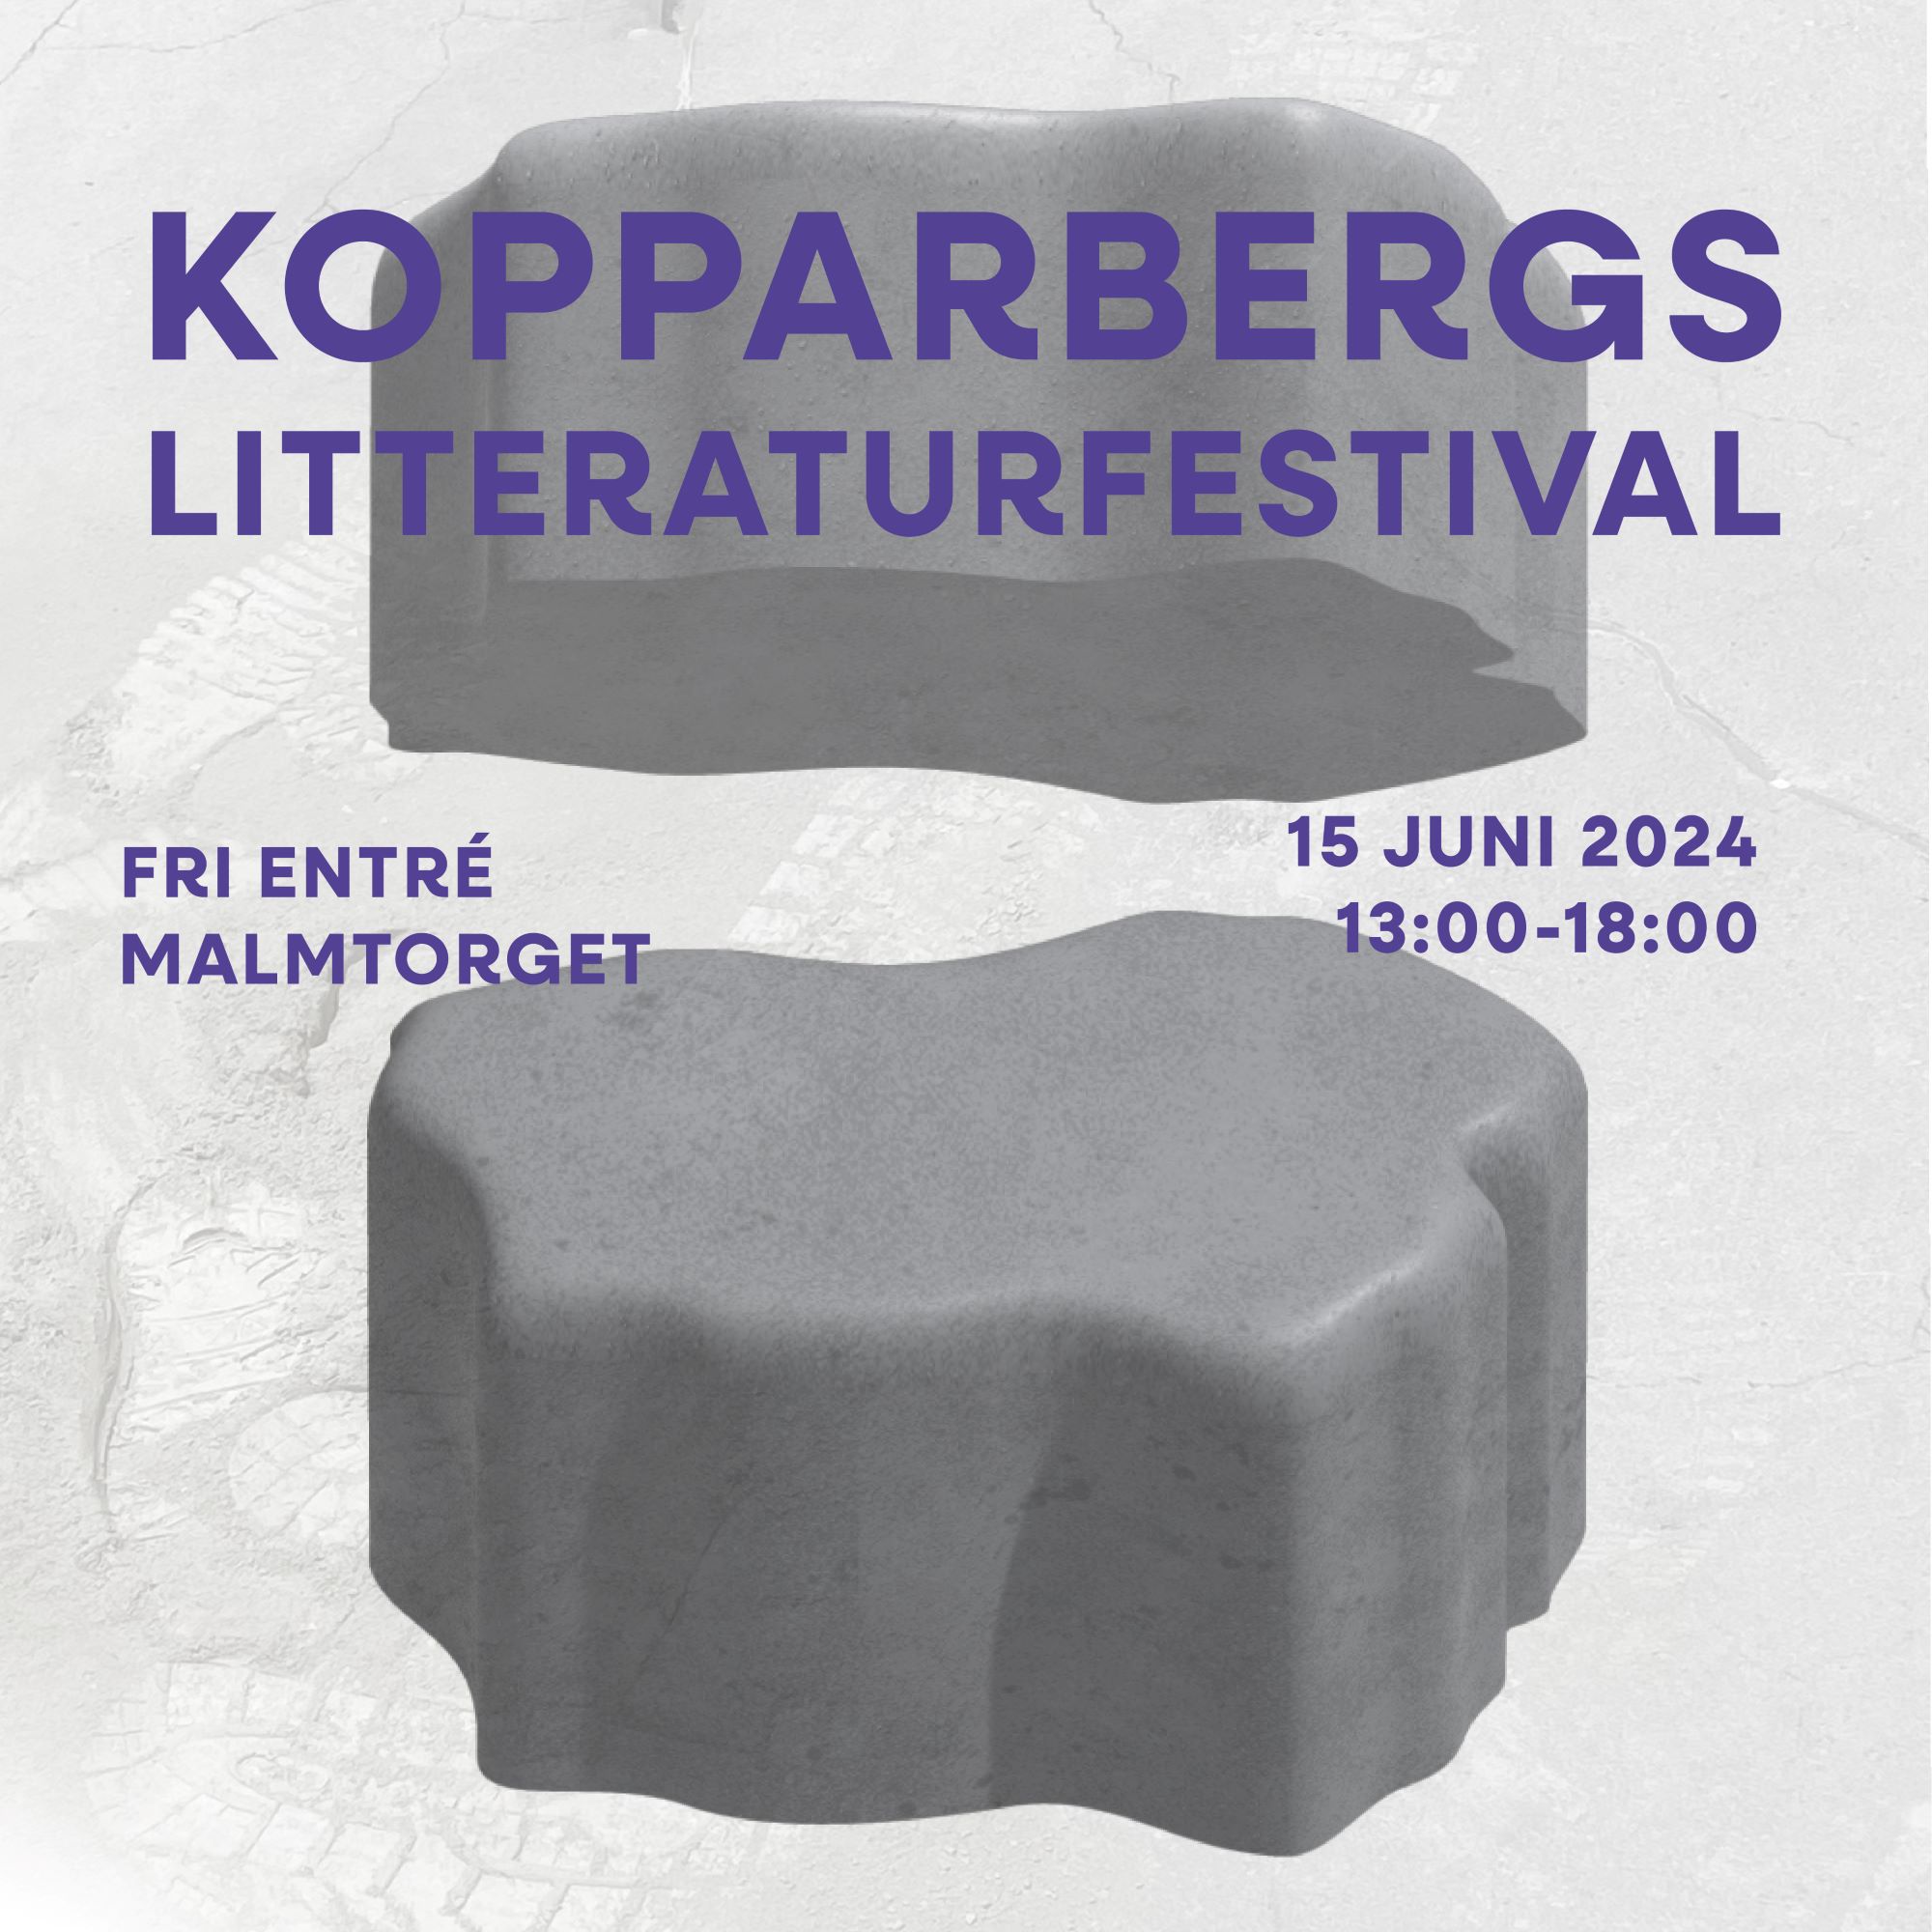 Kopparbergs litteraturfestival 15 juni 2024 Fri entré Malmtorget